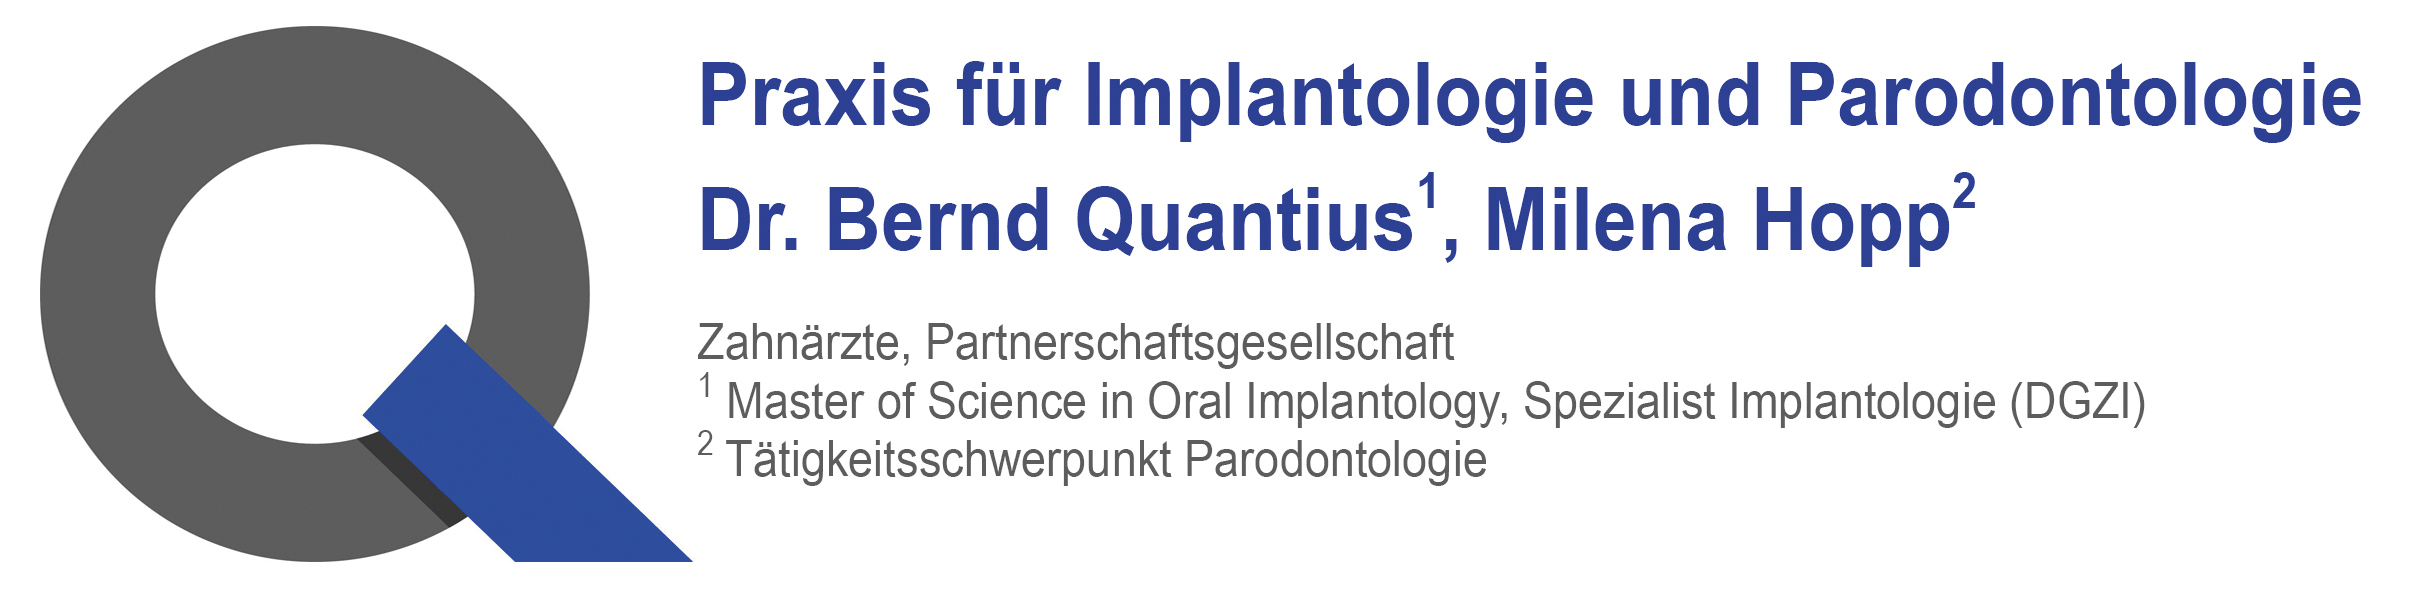 Praxis für Implantologie & Parodontologie Dr. Bernd Quantius M.Sc. und Milena Hopp